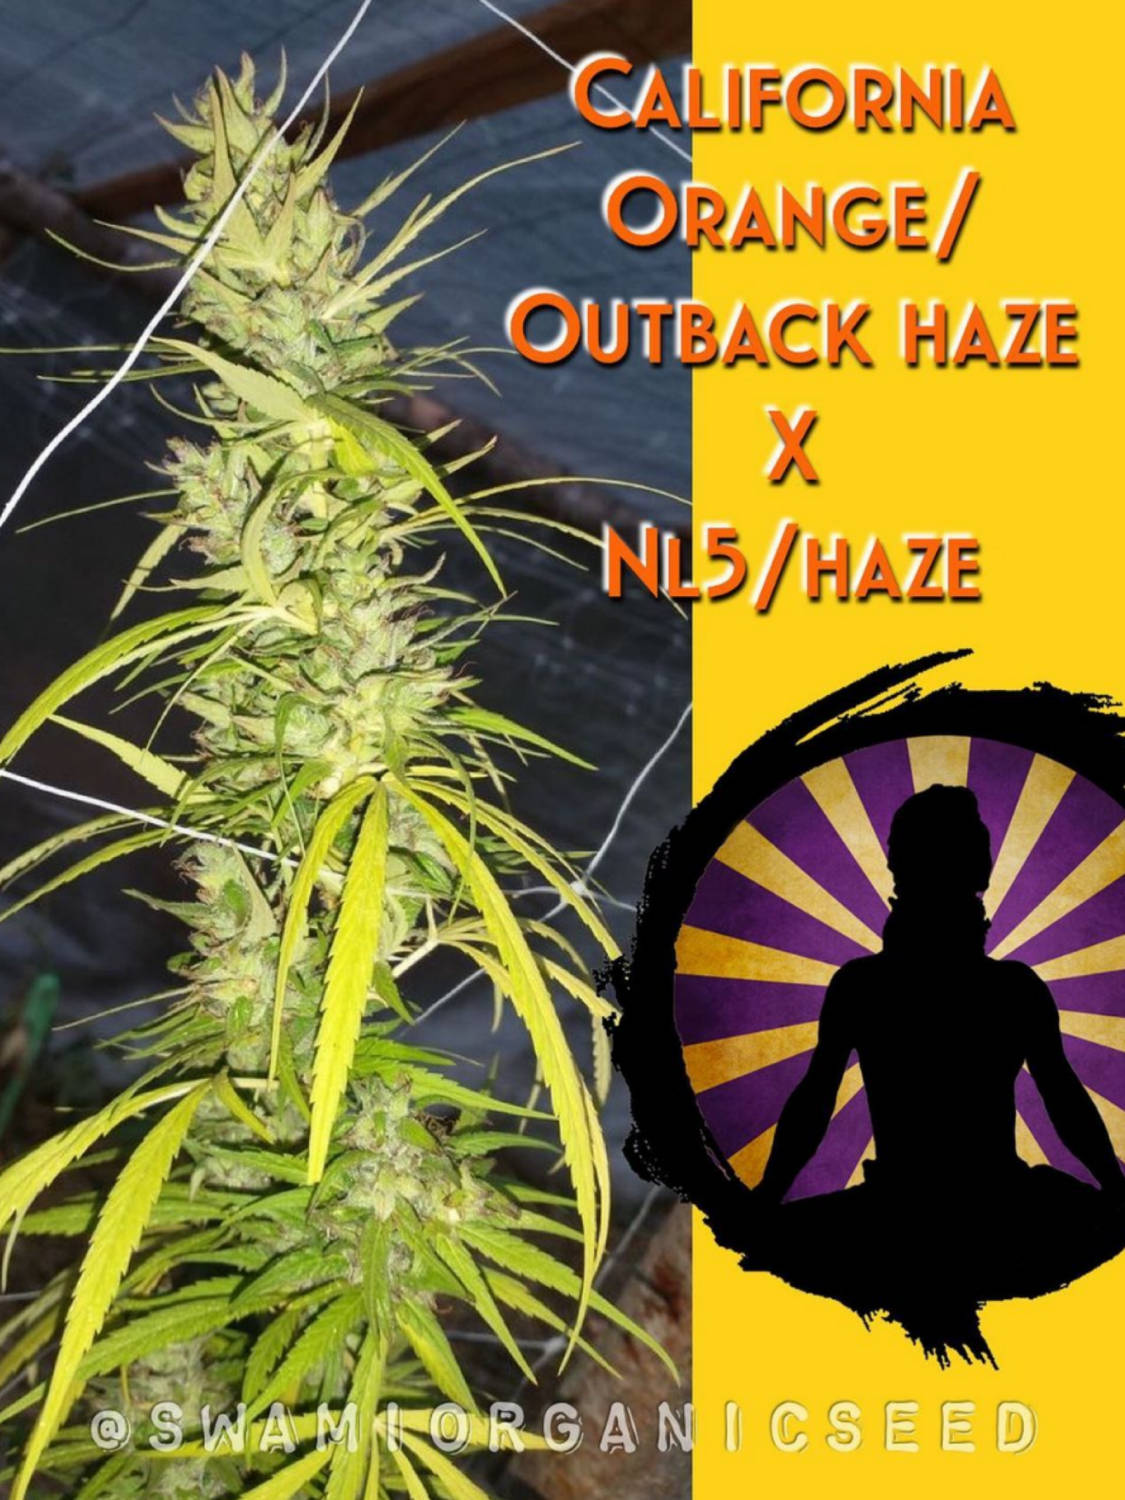 Cali Orange/Outback Haze x NL5/haze